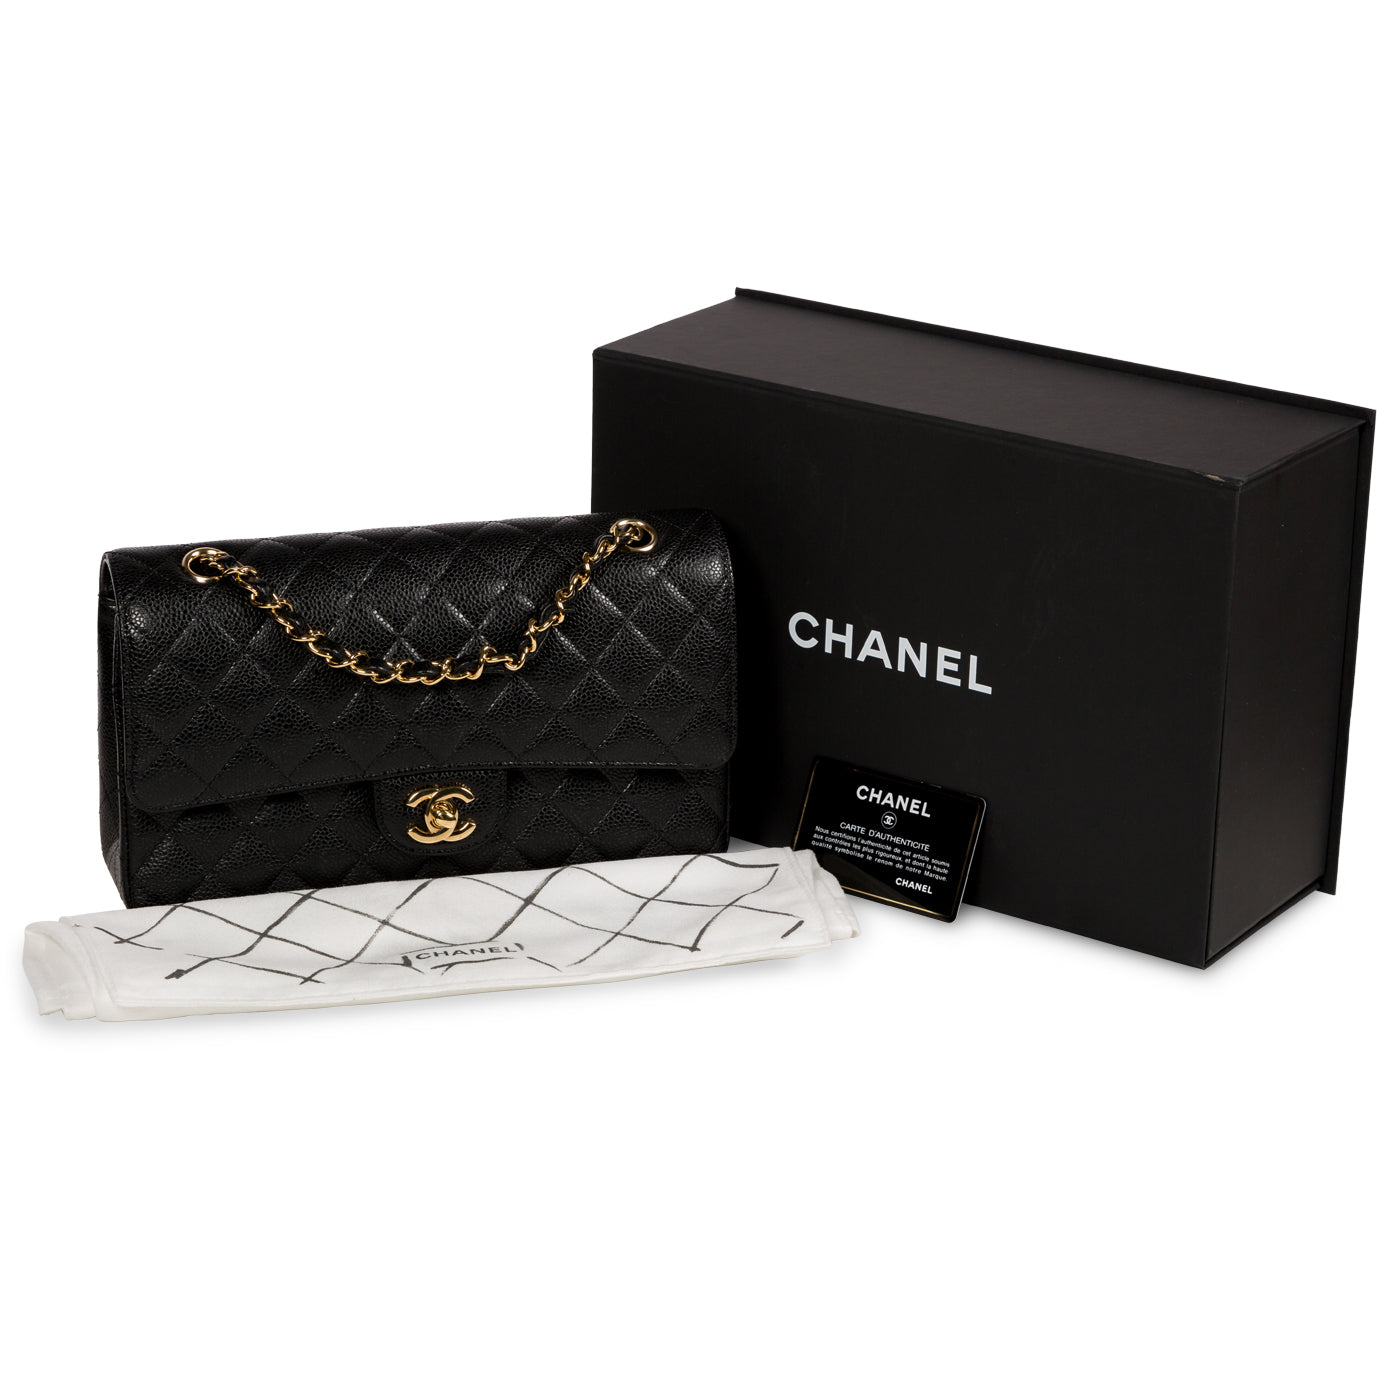 Chanel - Classic Flap Bag - Medium - Black Caviar - GHW - Brand New